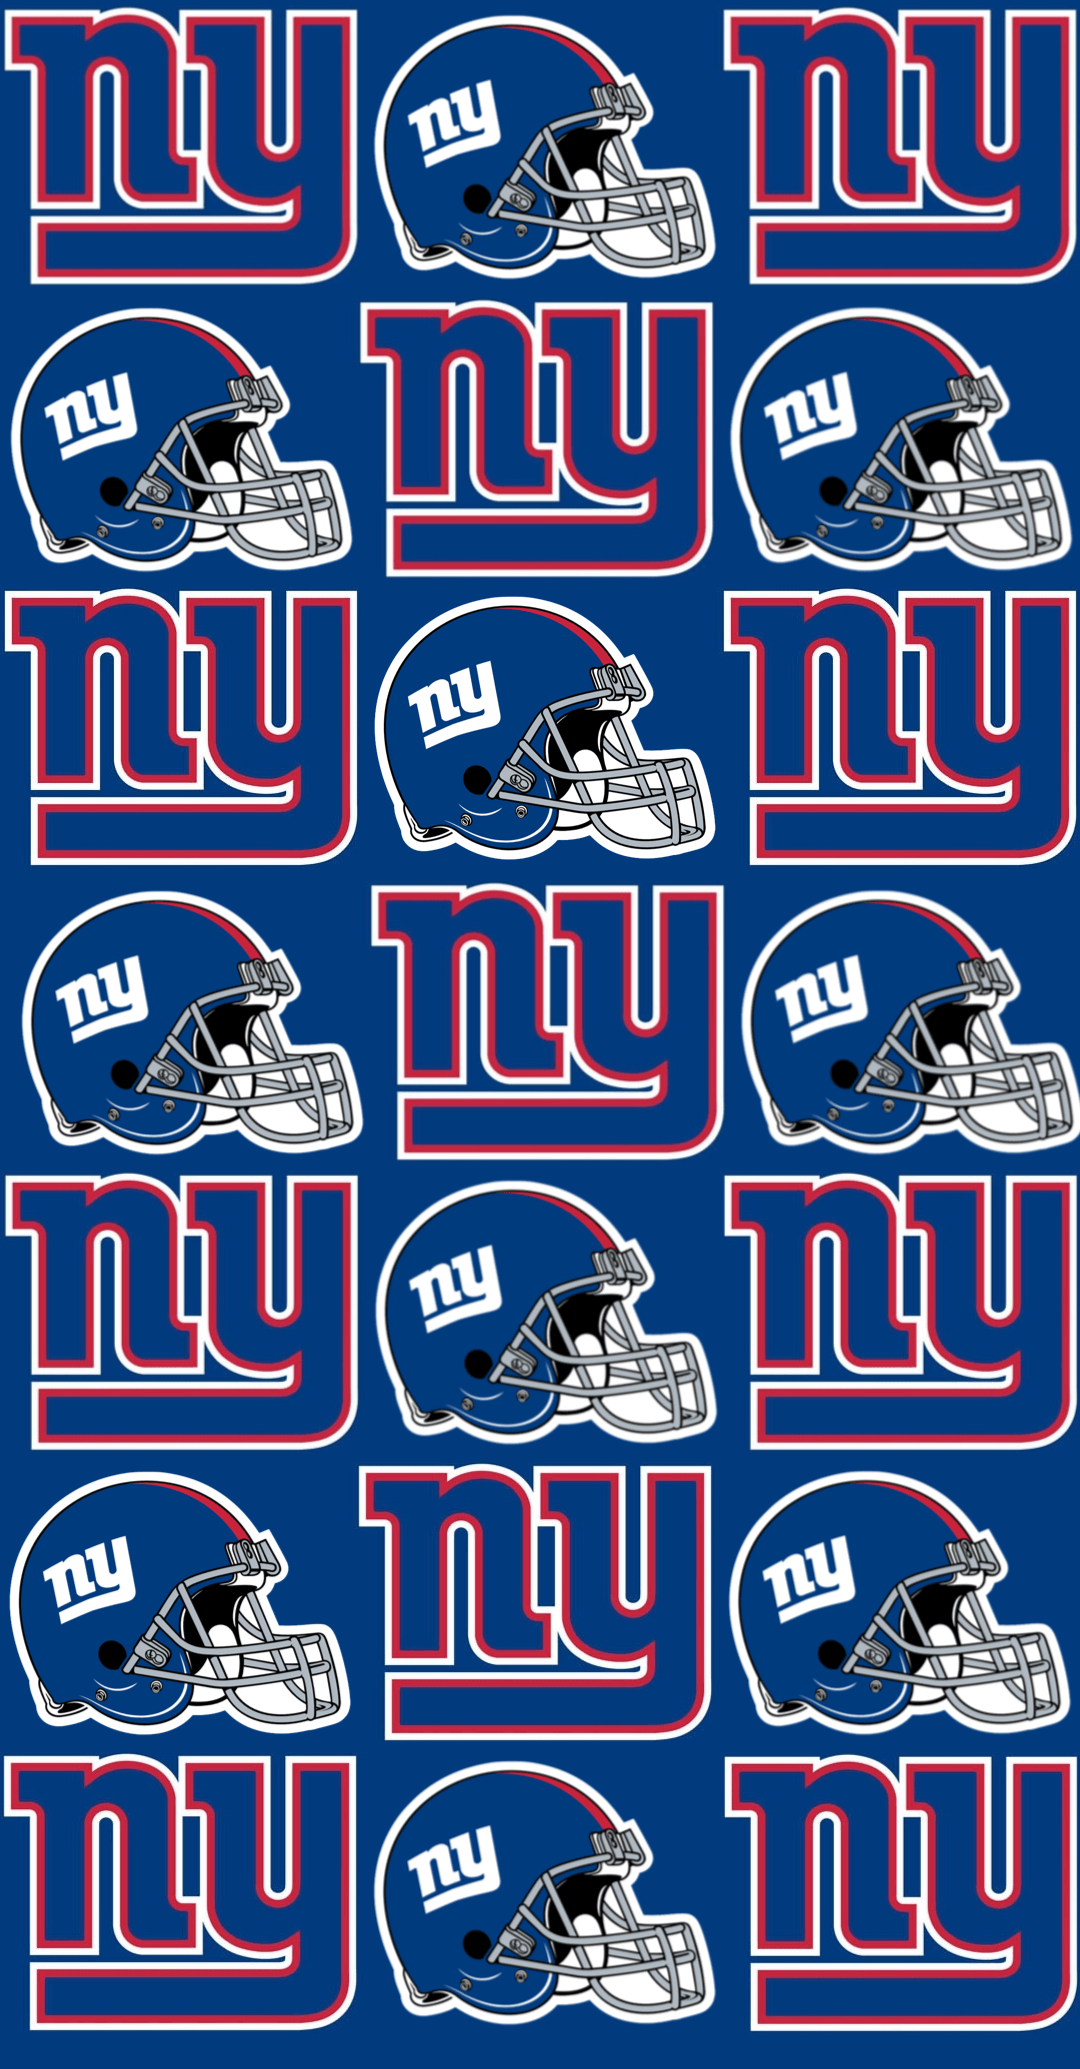 My Ny Giants iPhone wallpaper. New york giants football, New york giants, Ny giants